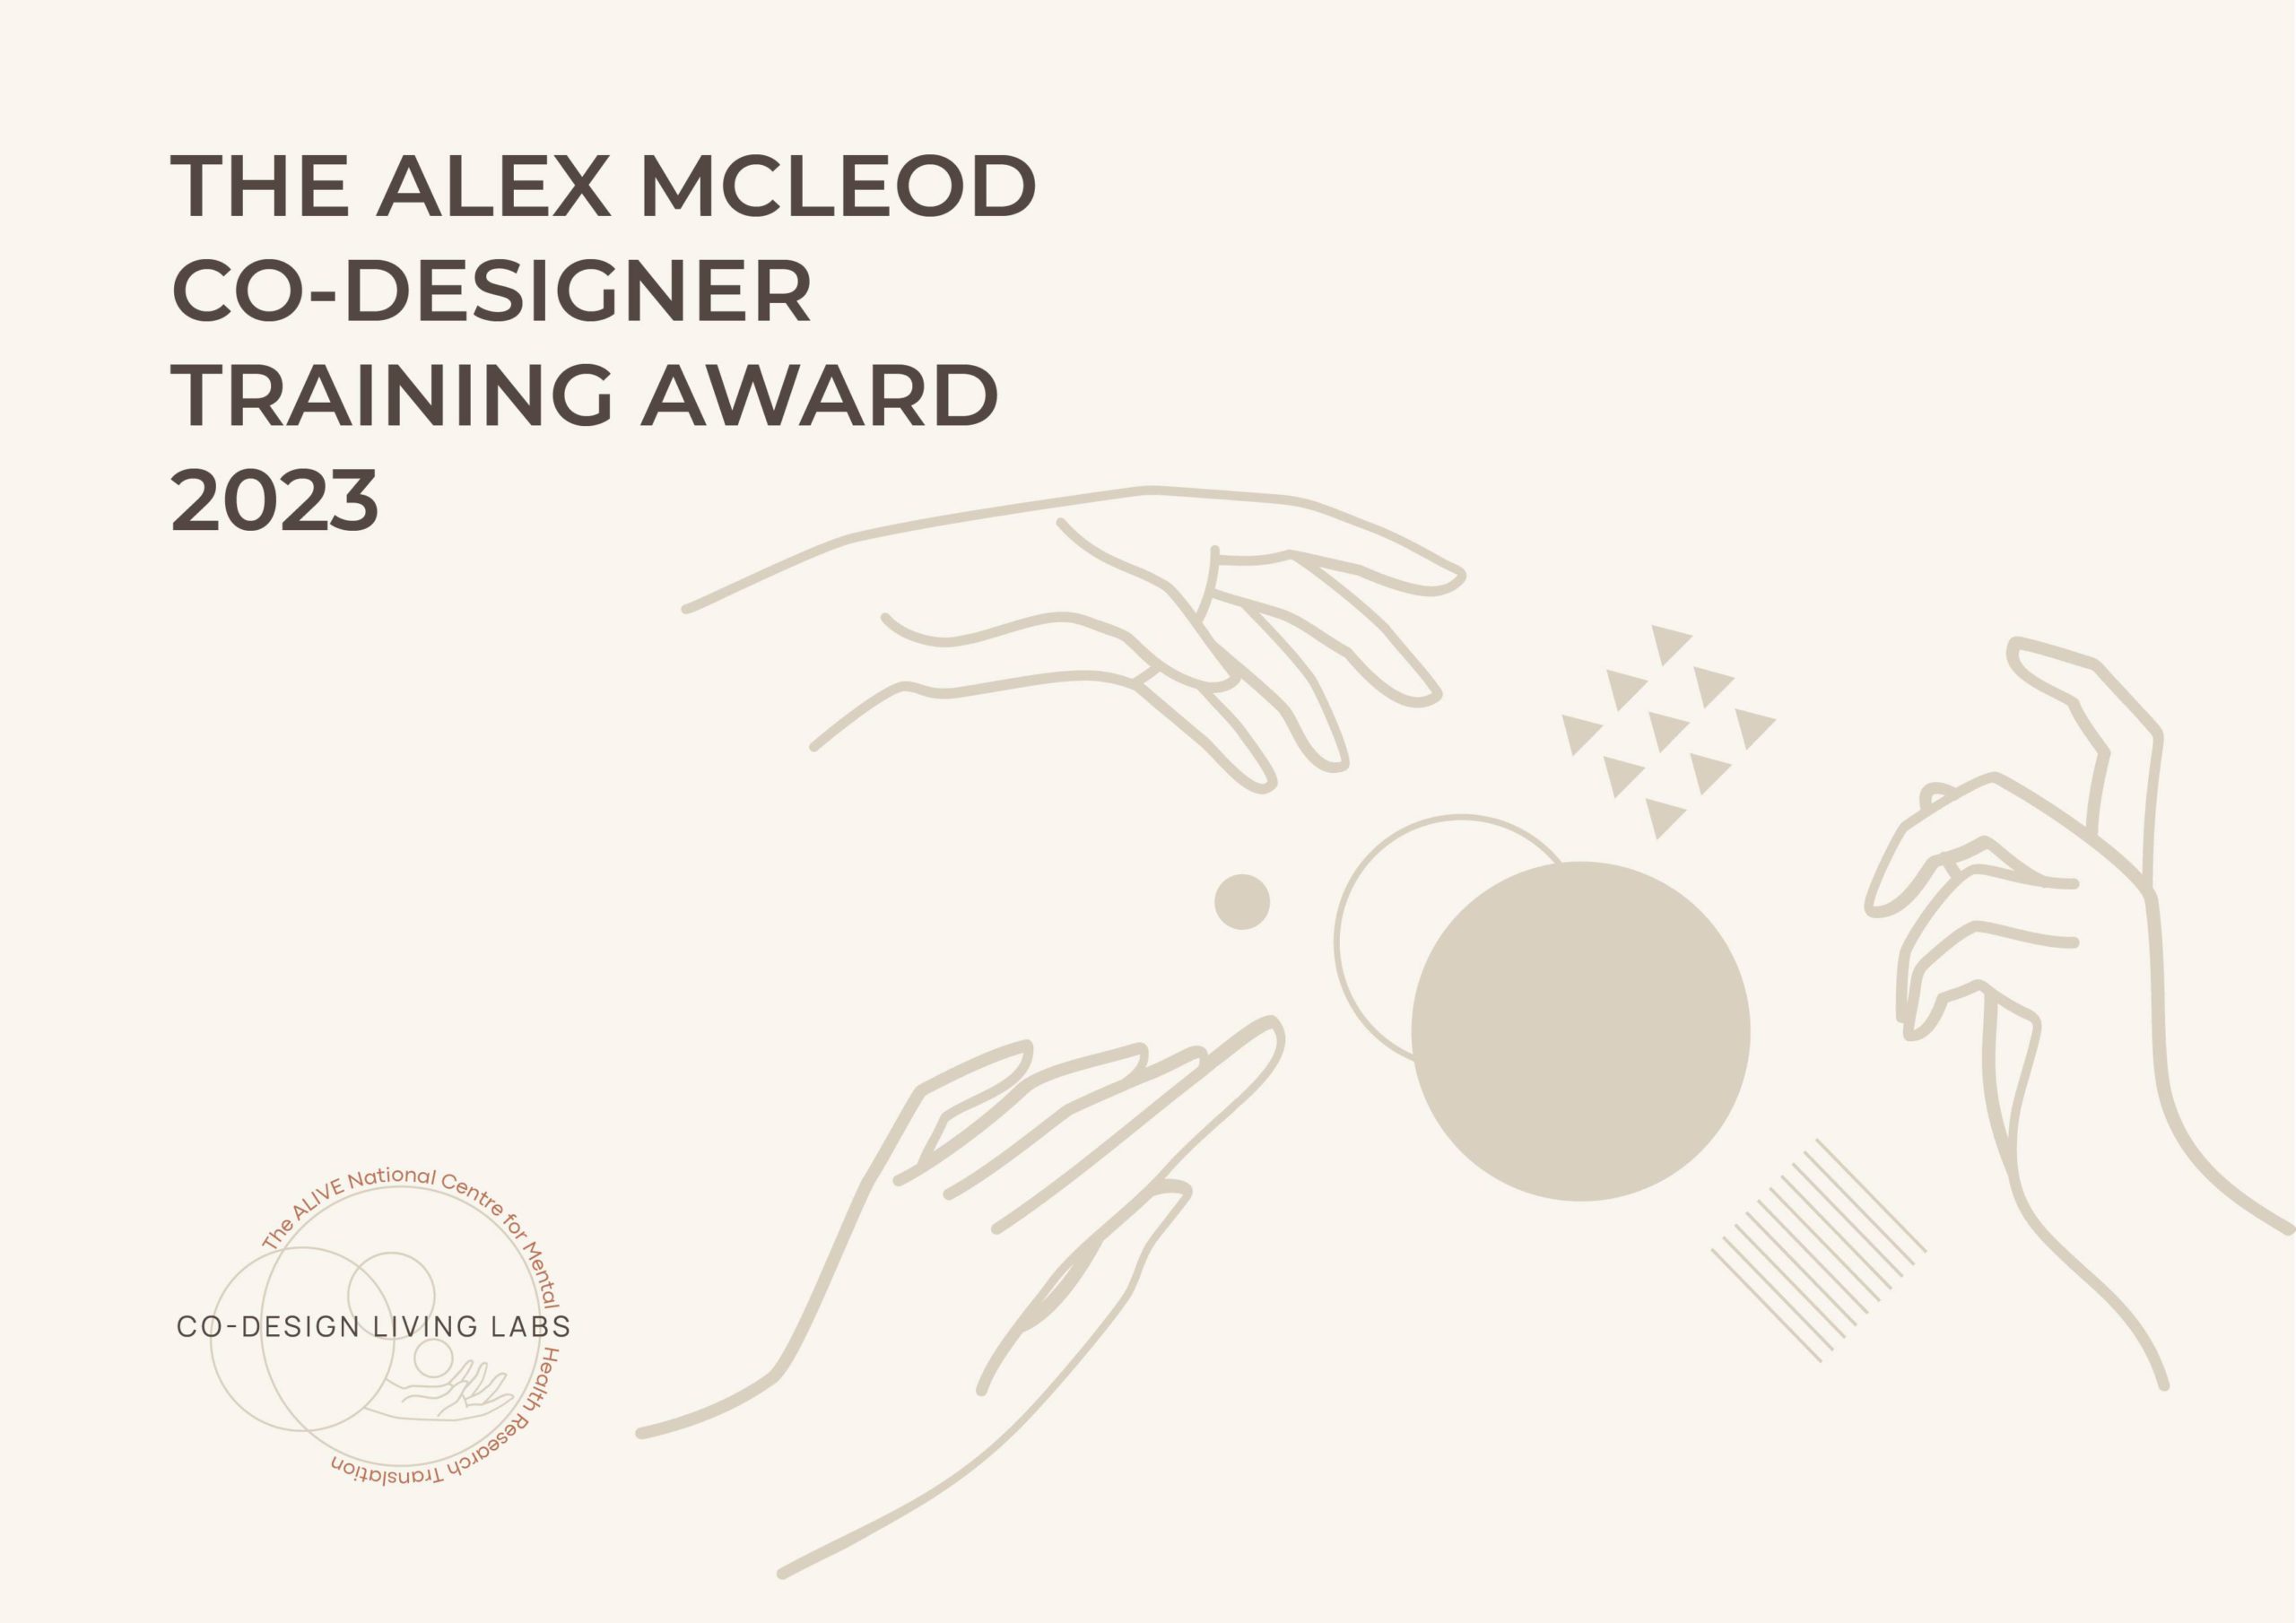 The Alex McLeod Training Award